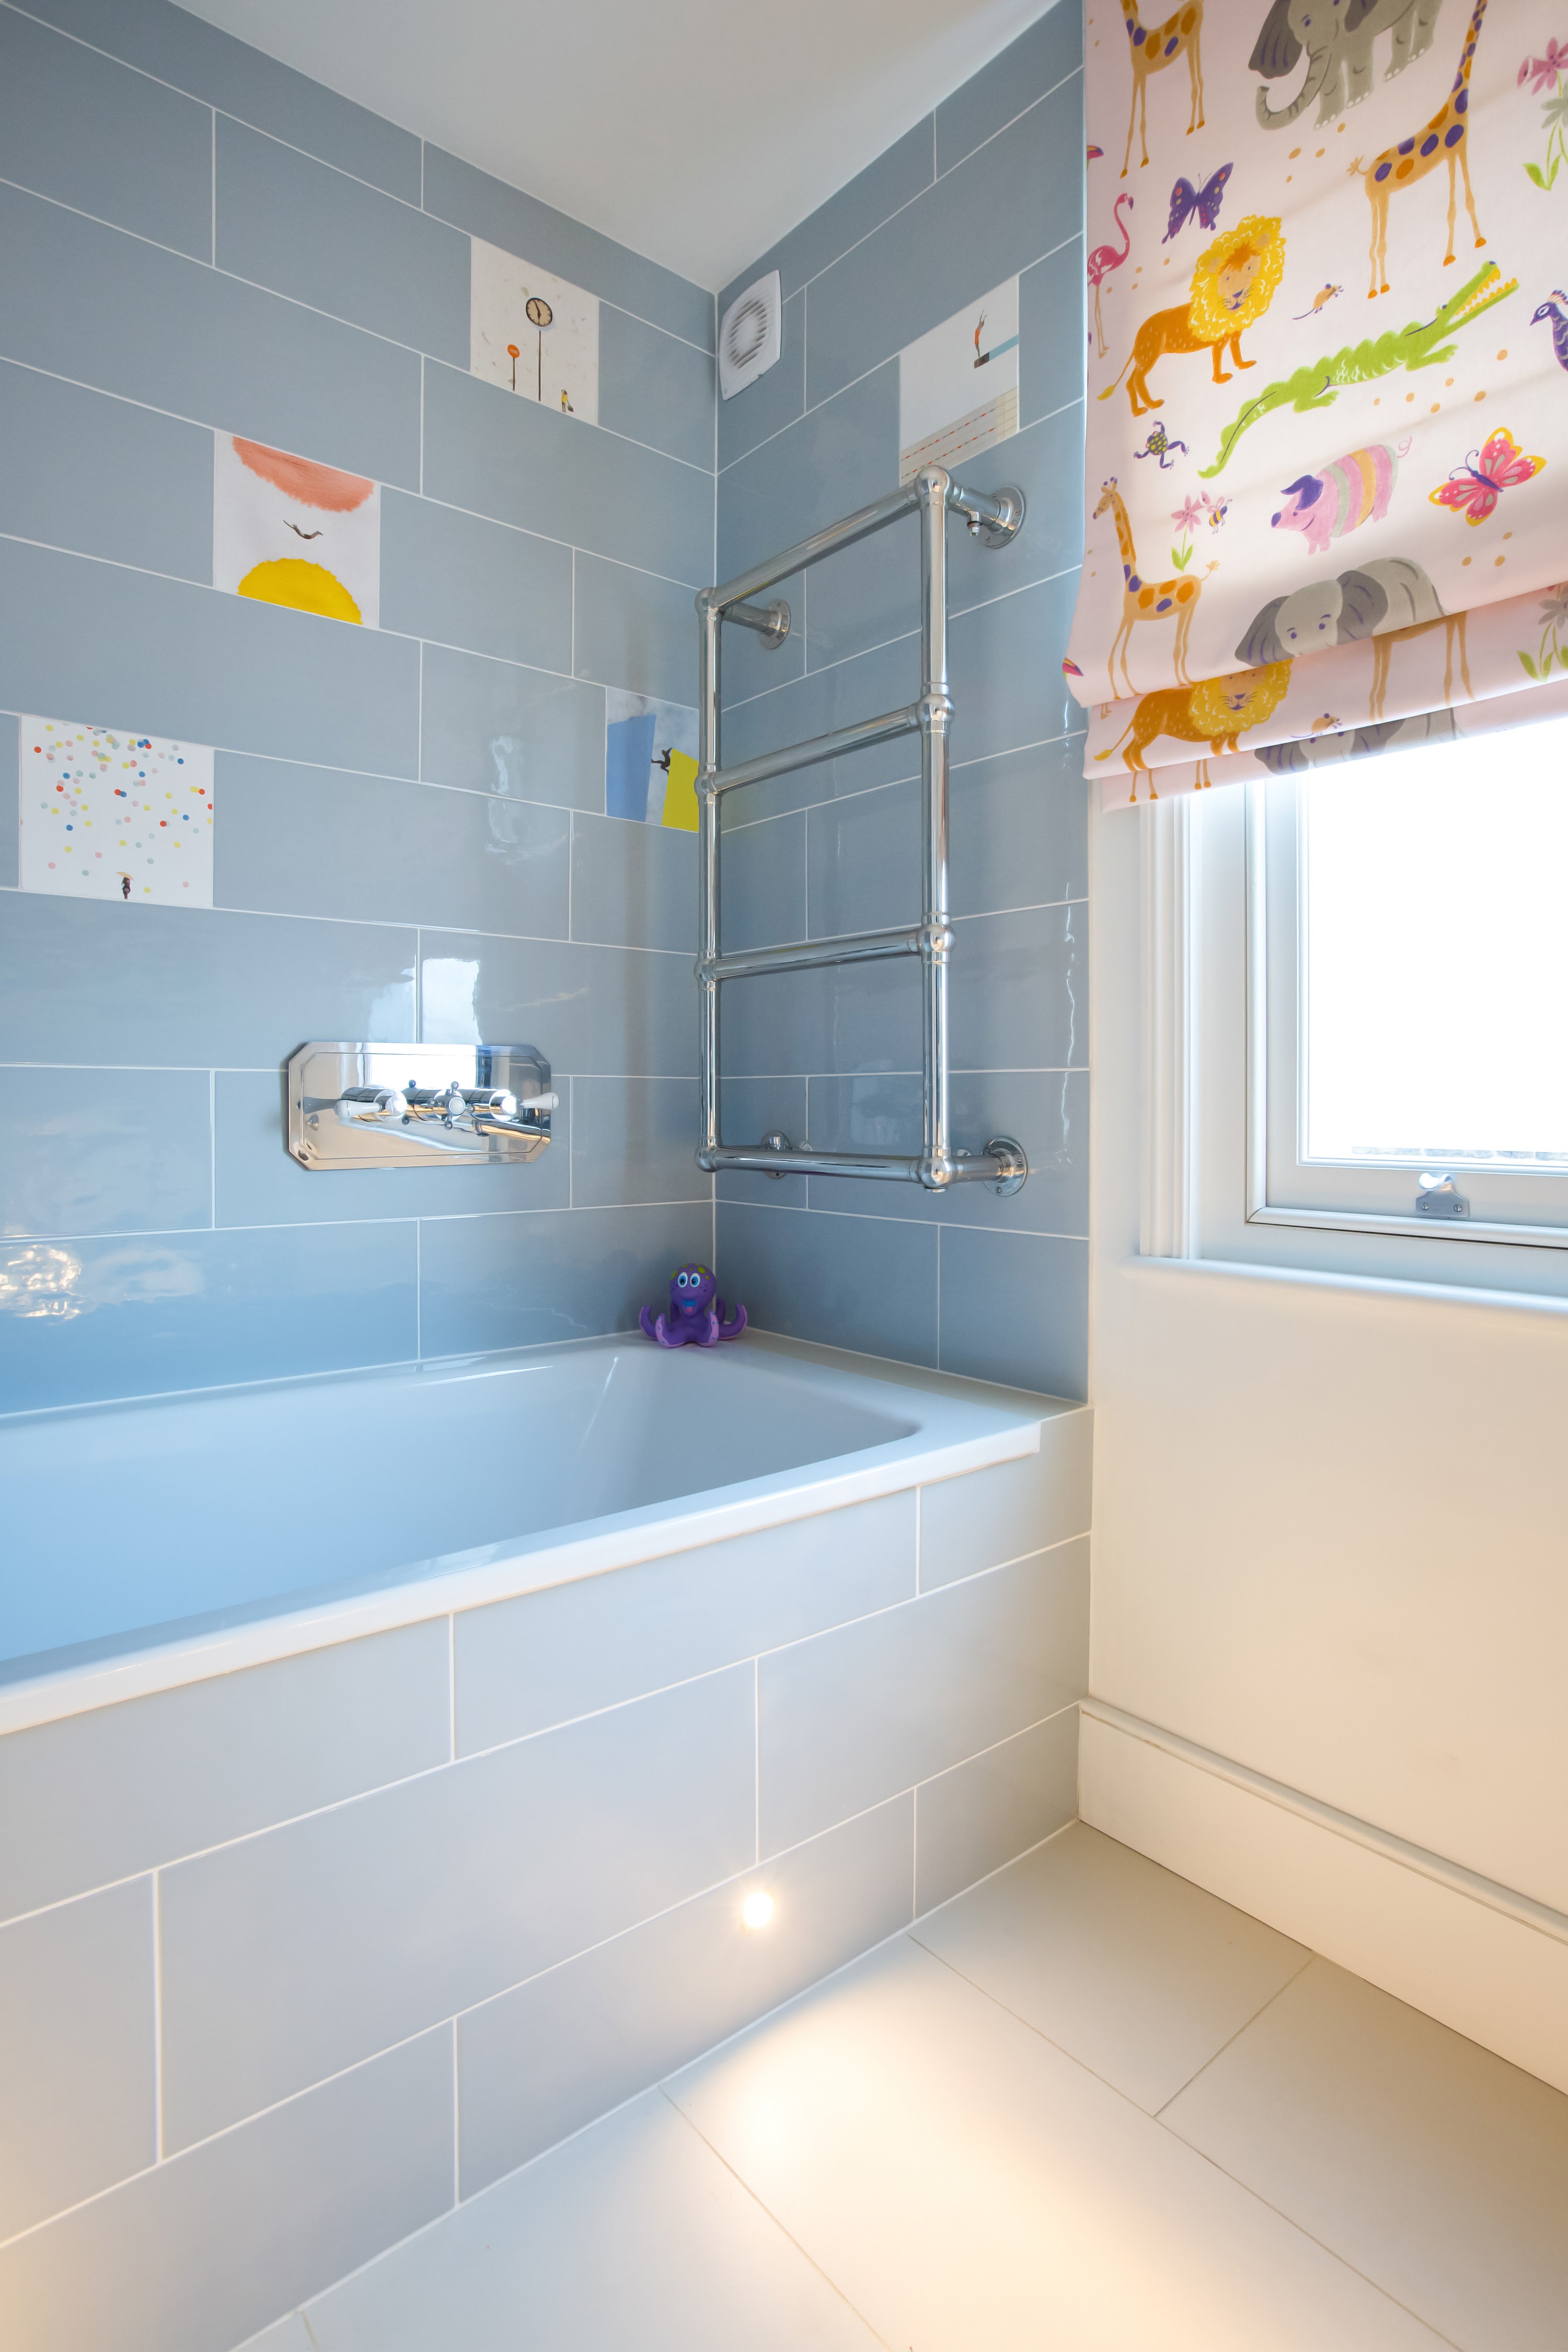 playful hand-made glazed tiles make this children's bathroom a joy. Sensor lights add practicality.